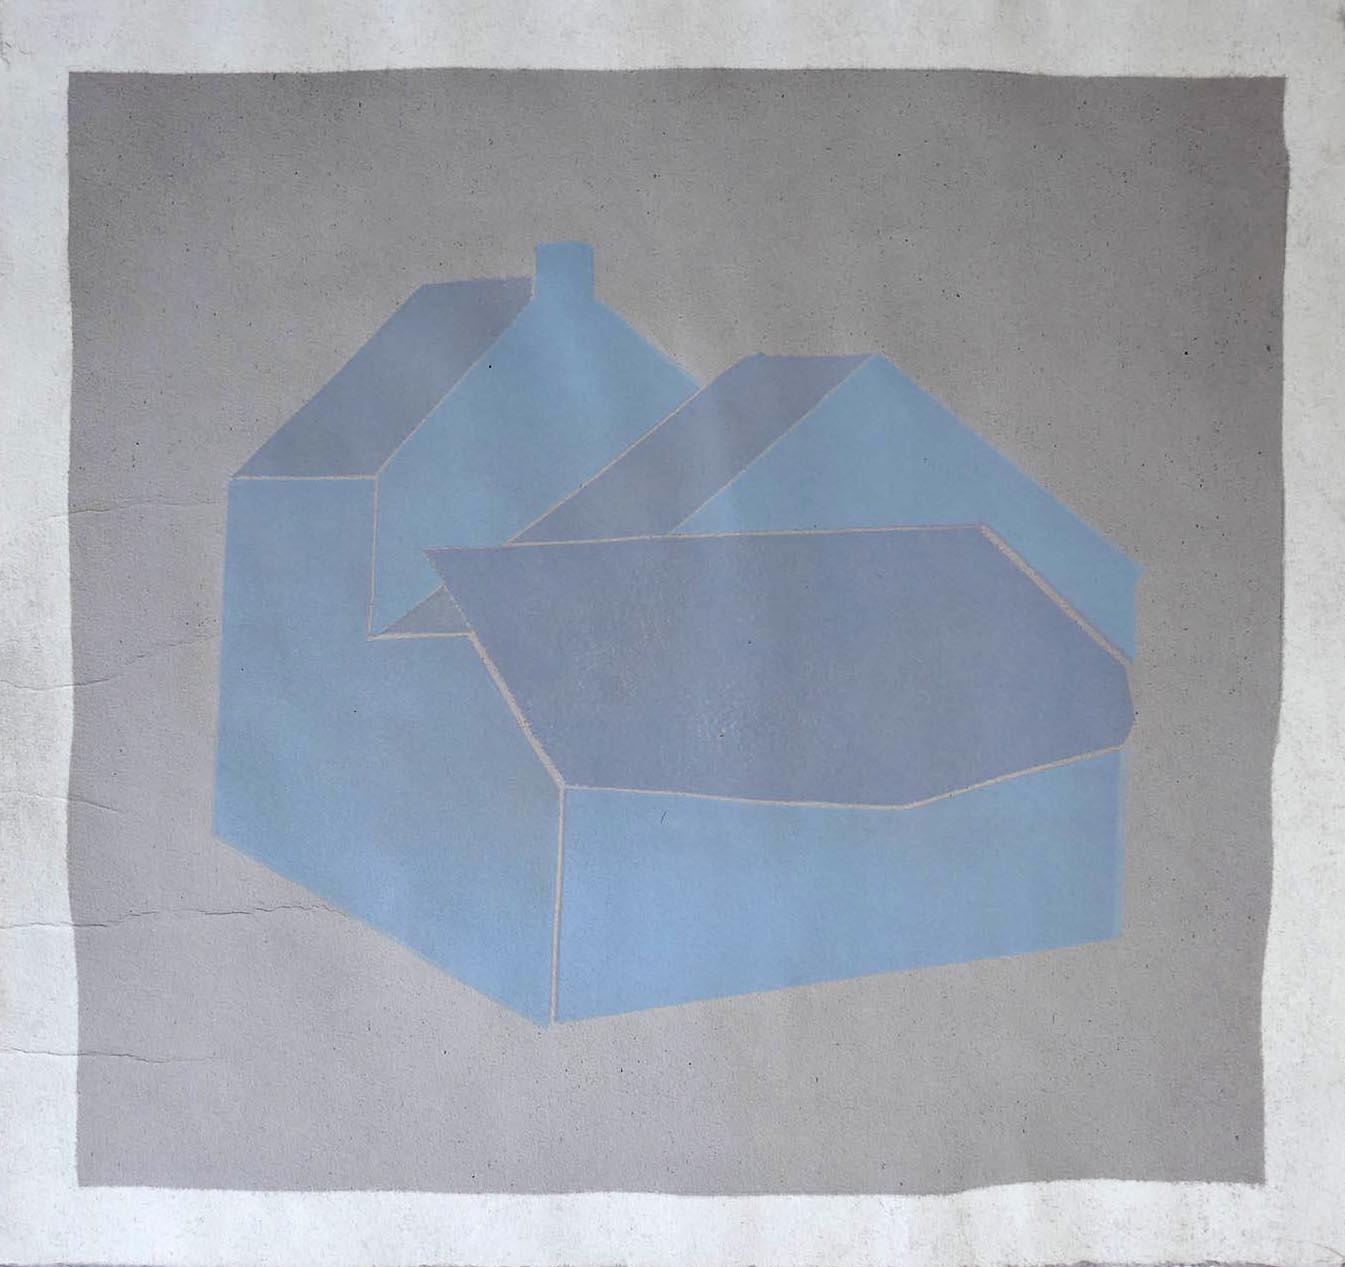 Architecture végétale 2, 2020, monotype on dyed paper (elderberry), image size 43,5x43,5 cm, paper size 45x45 cm, edition of 1